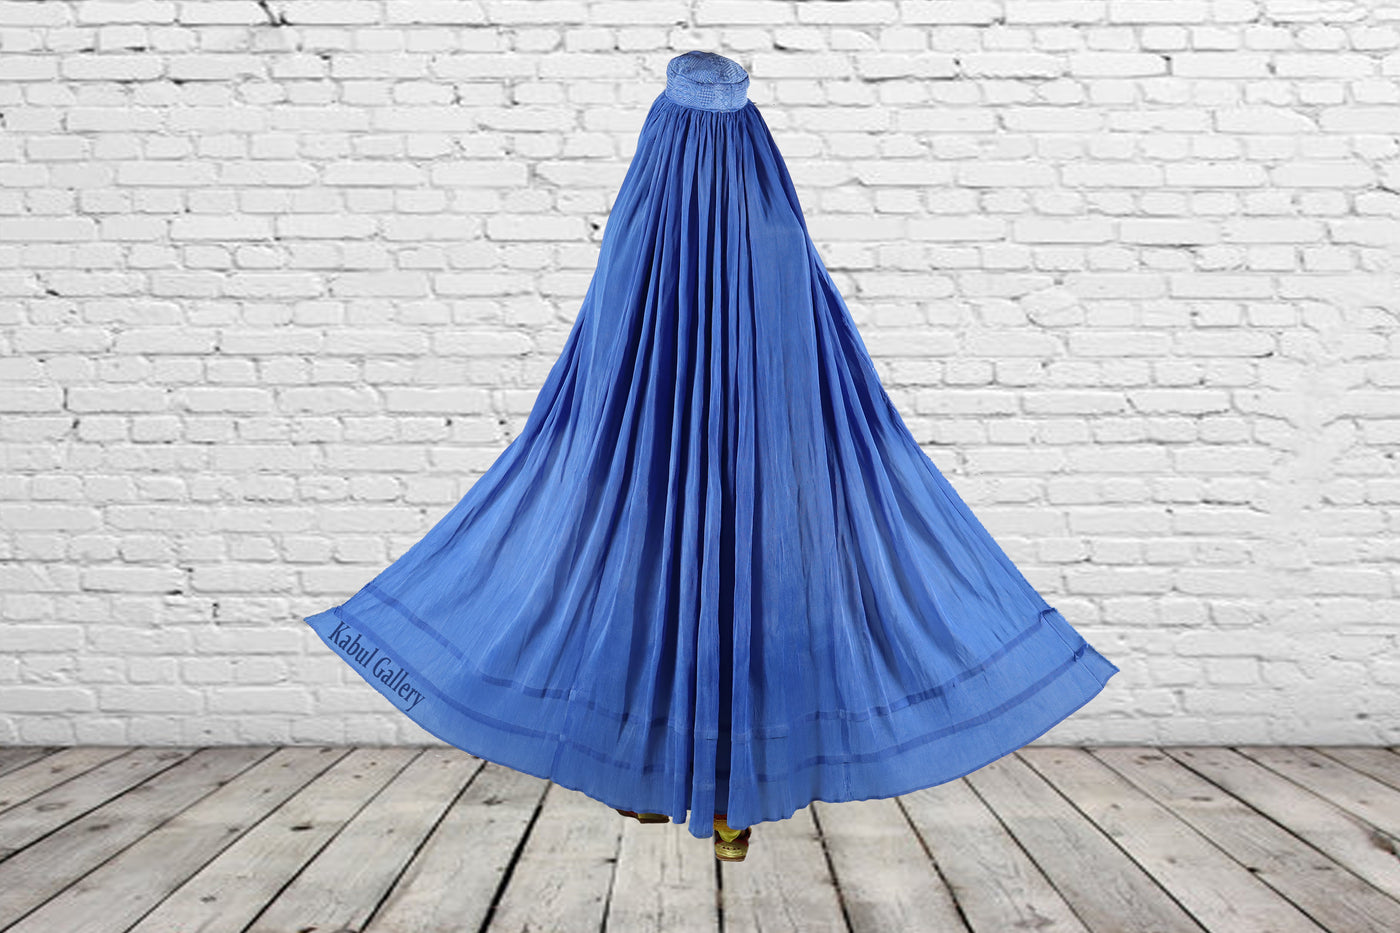 Original Afghanische Frauen schleier kopftuch Burka Burqua umhang afghan burqa abaya Niqab Kleid hijab Tschador afghanistan Pakistan (blau)  Orientsbazar   